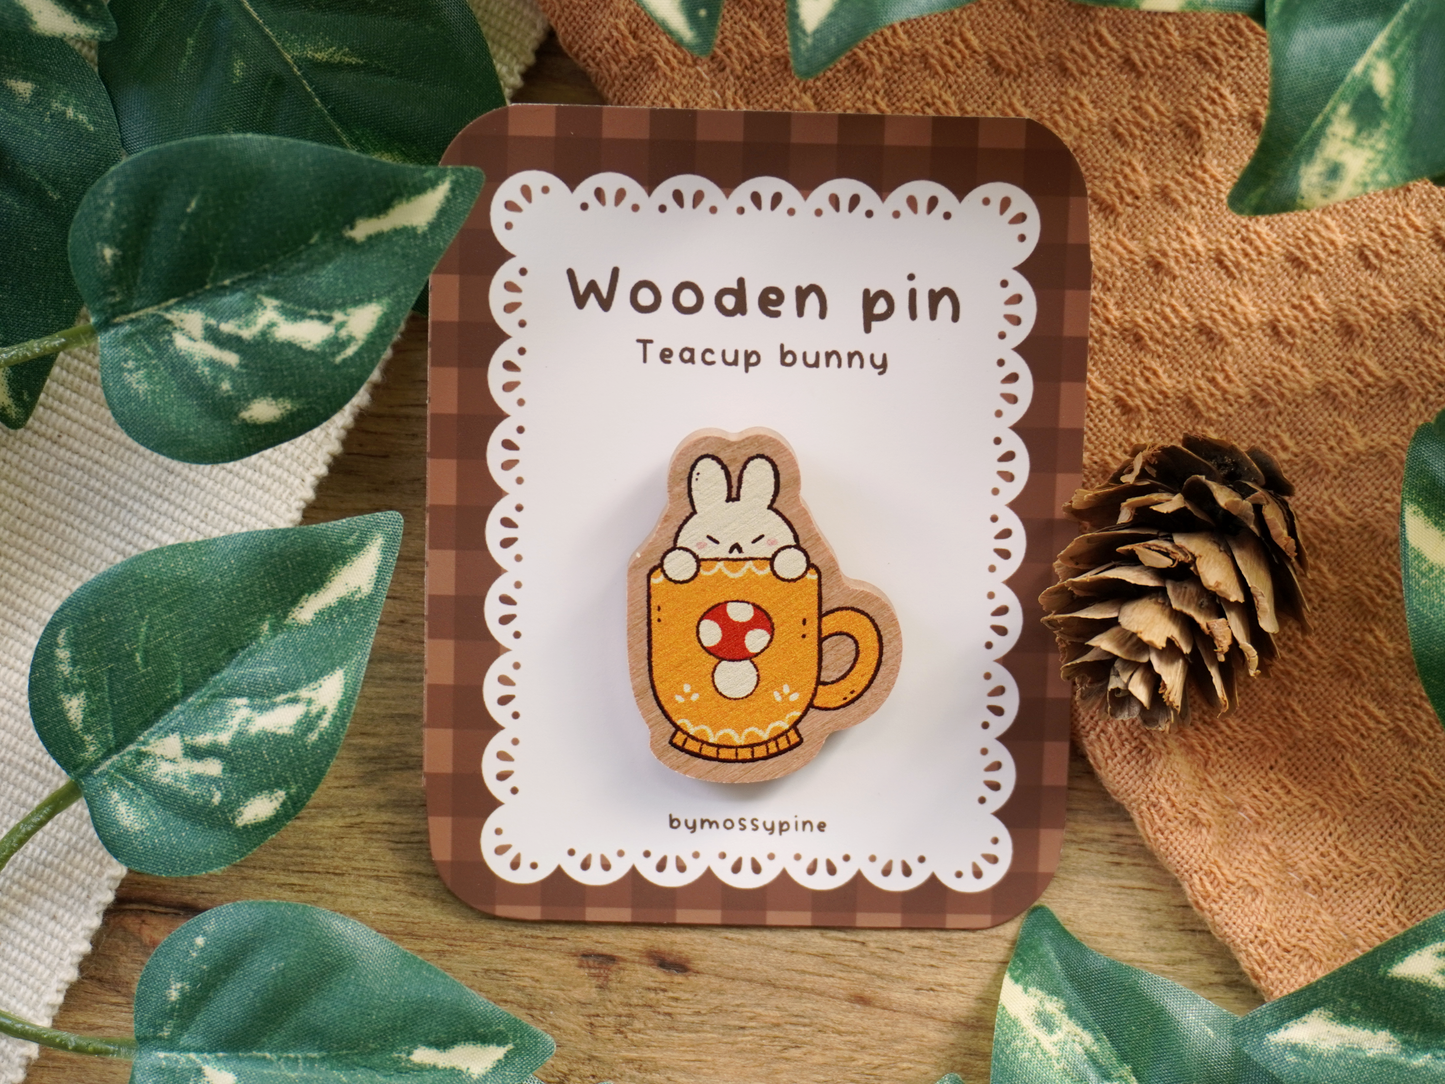 Yellow Mushroom Teacup Bunny Wooden Pin